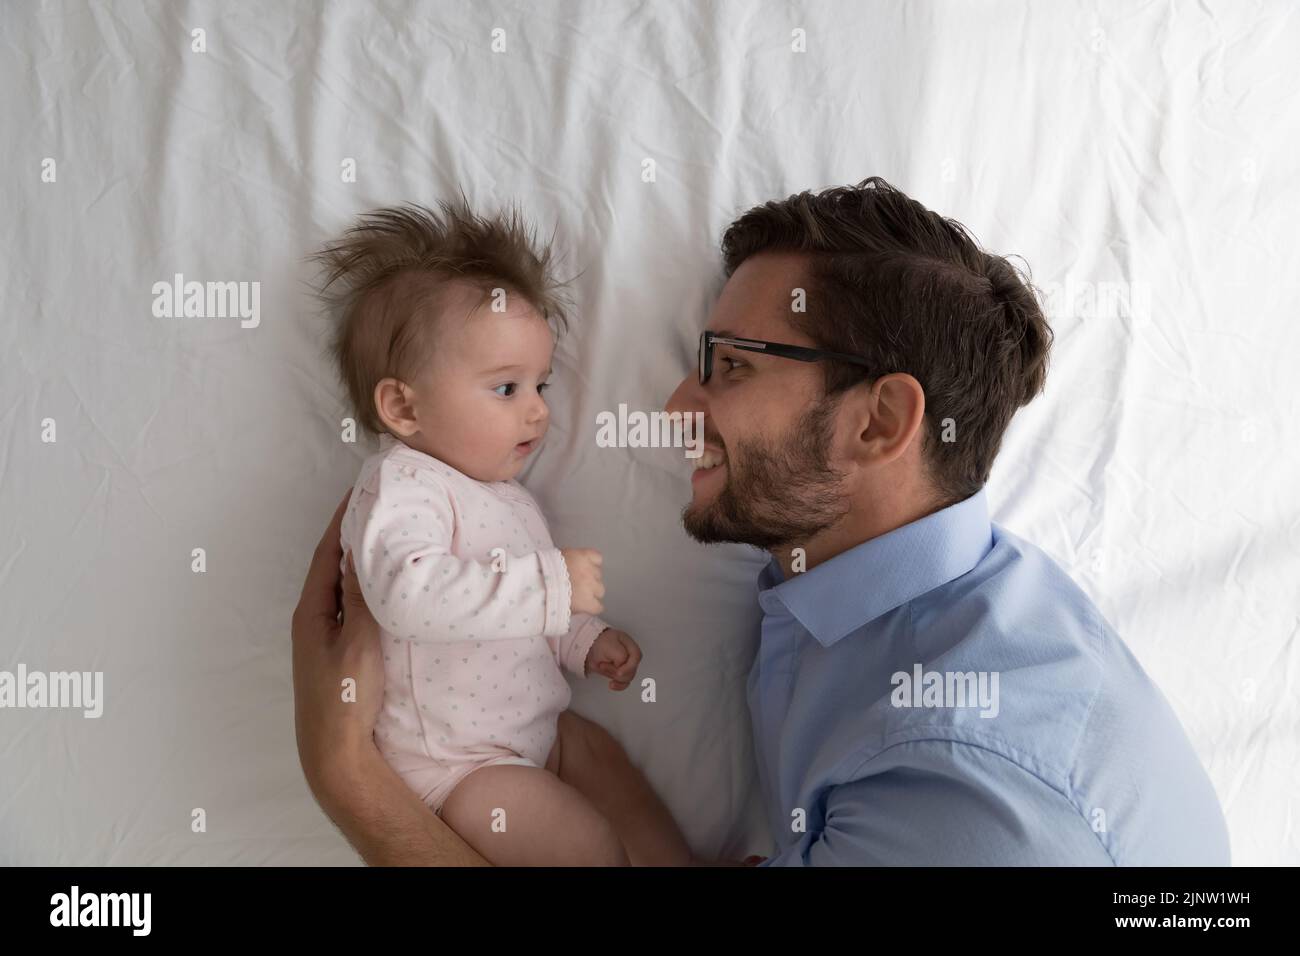 Padre amoroso abraza al bebé tumbado junto en sábanas blancas Foto de stock